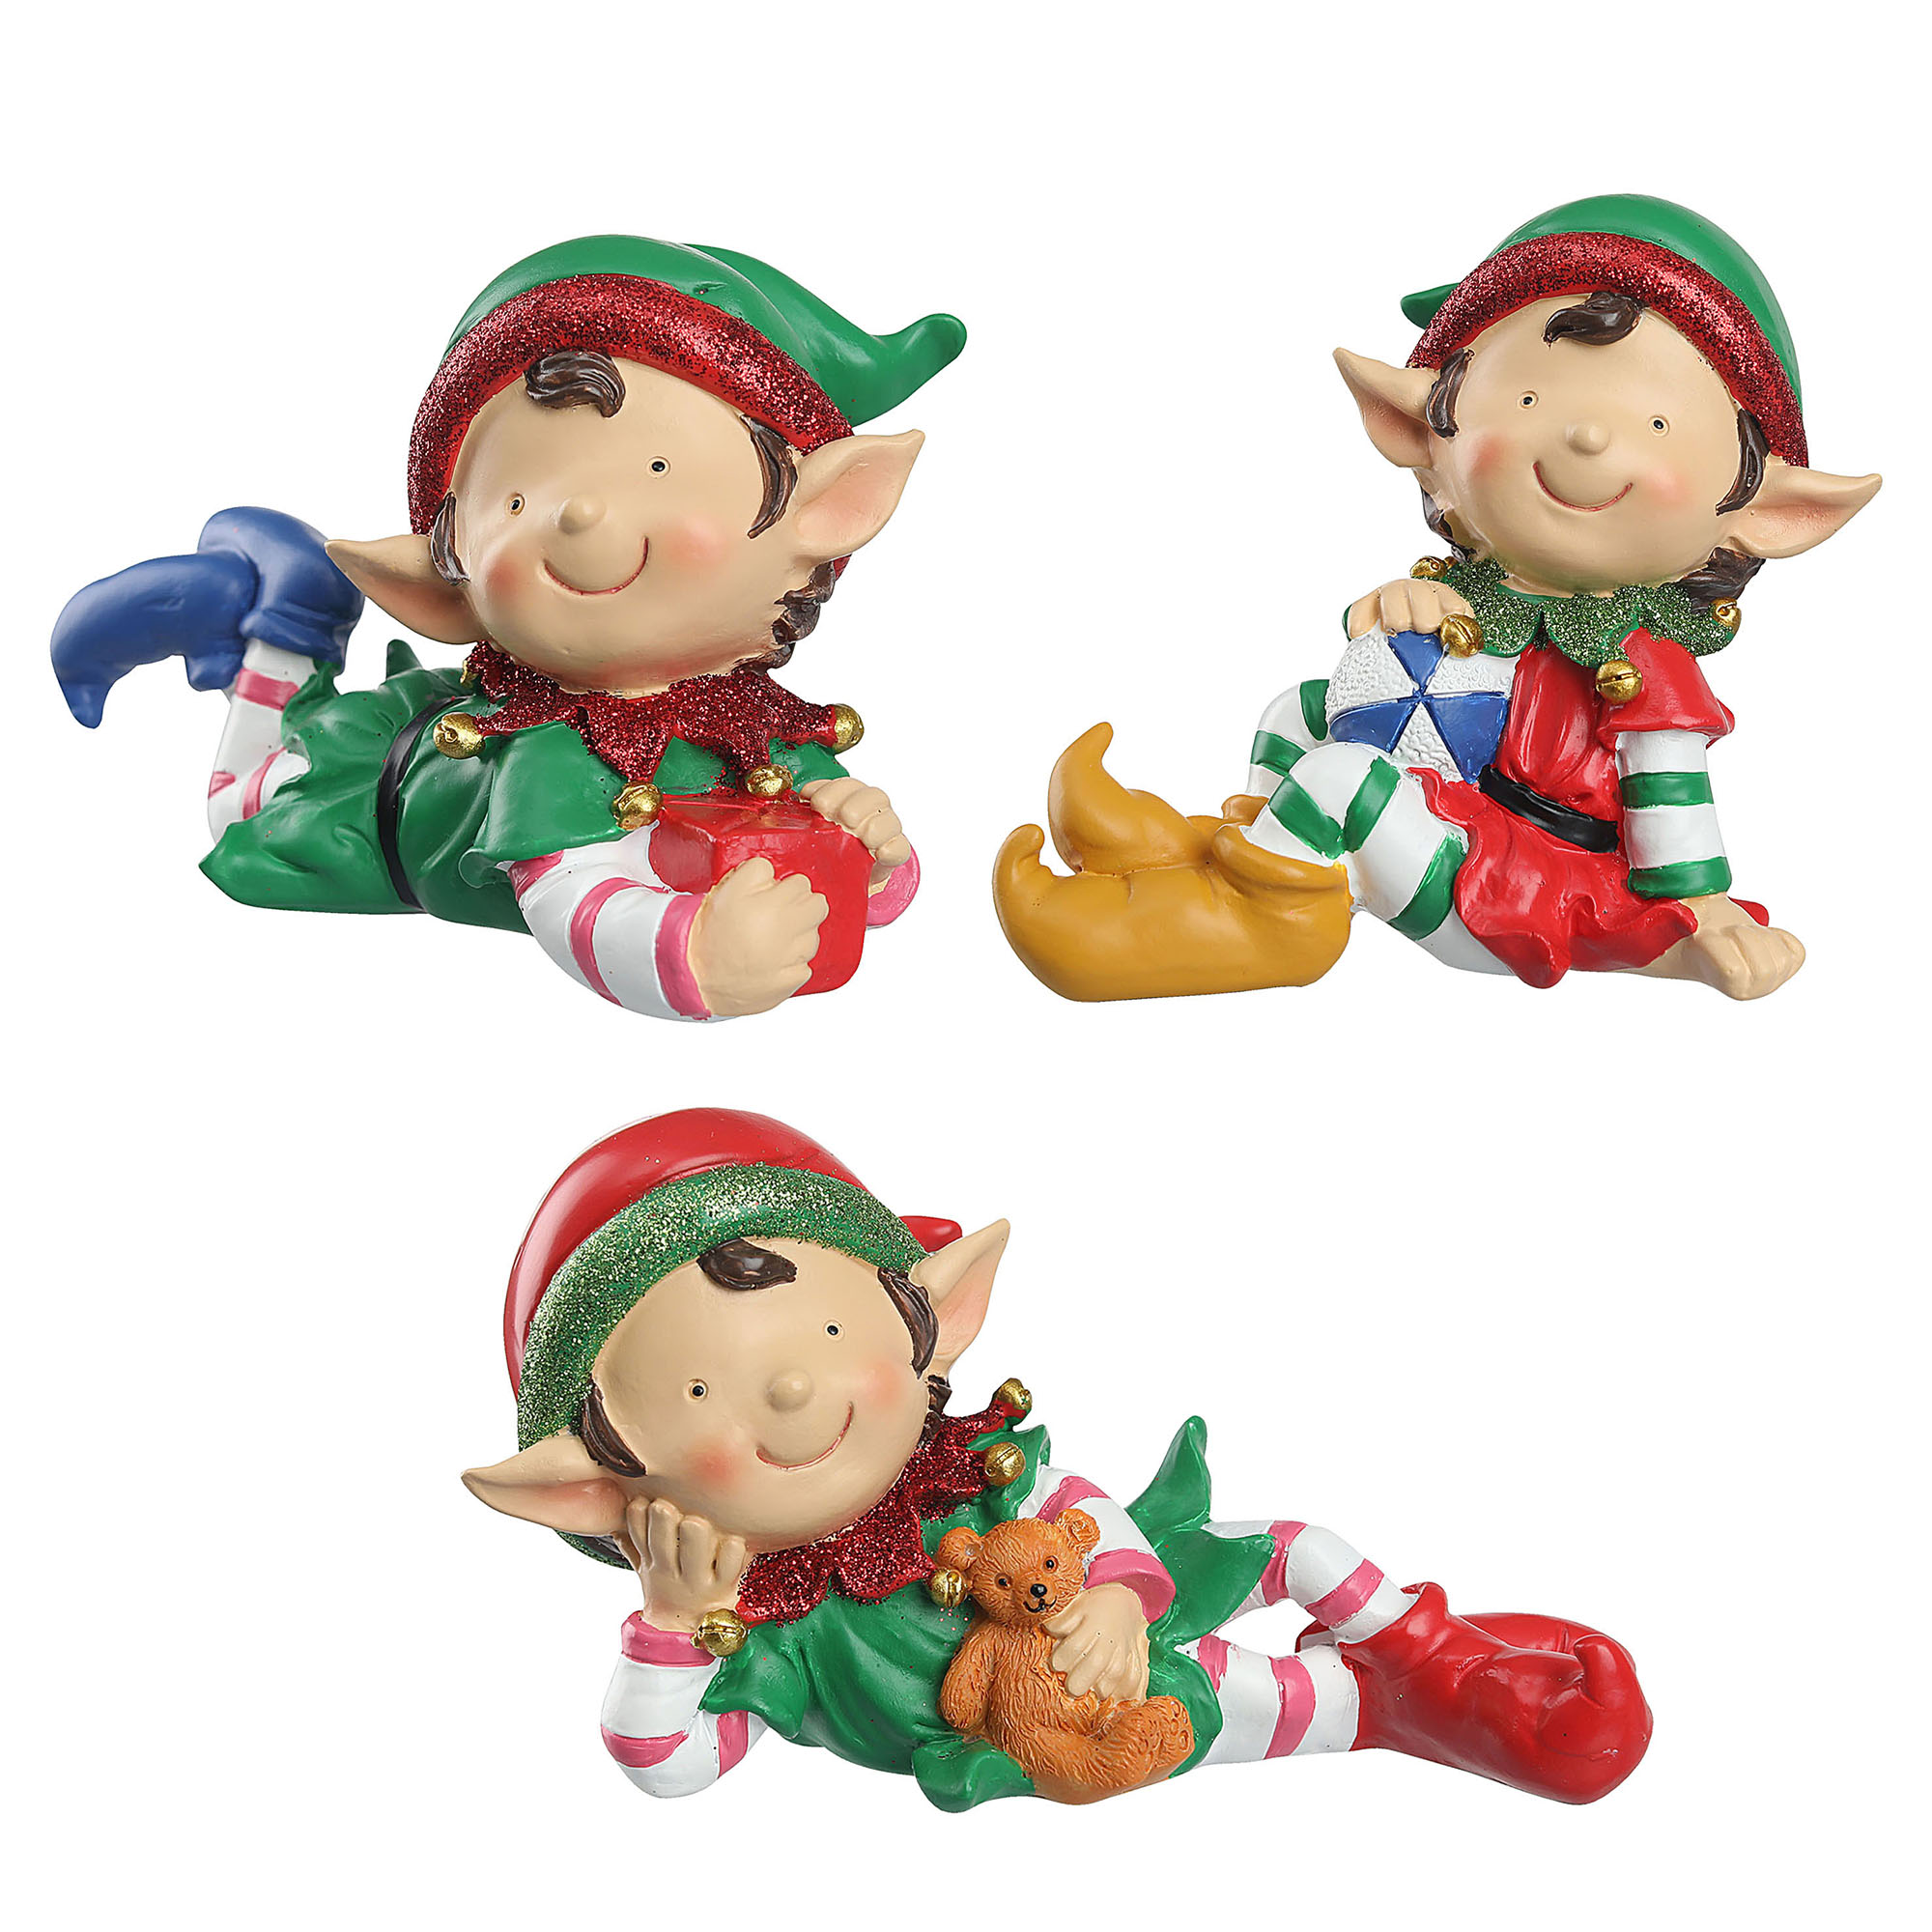 Holiday Time Multi-Colored Polyresin Joyful Christmas Elves Decoration, Set of 3, 3.1"H - image 1 of 6